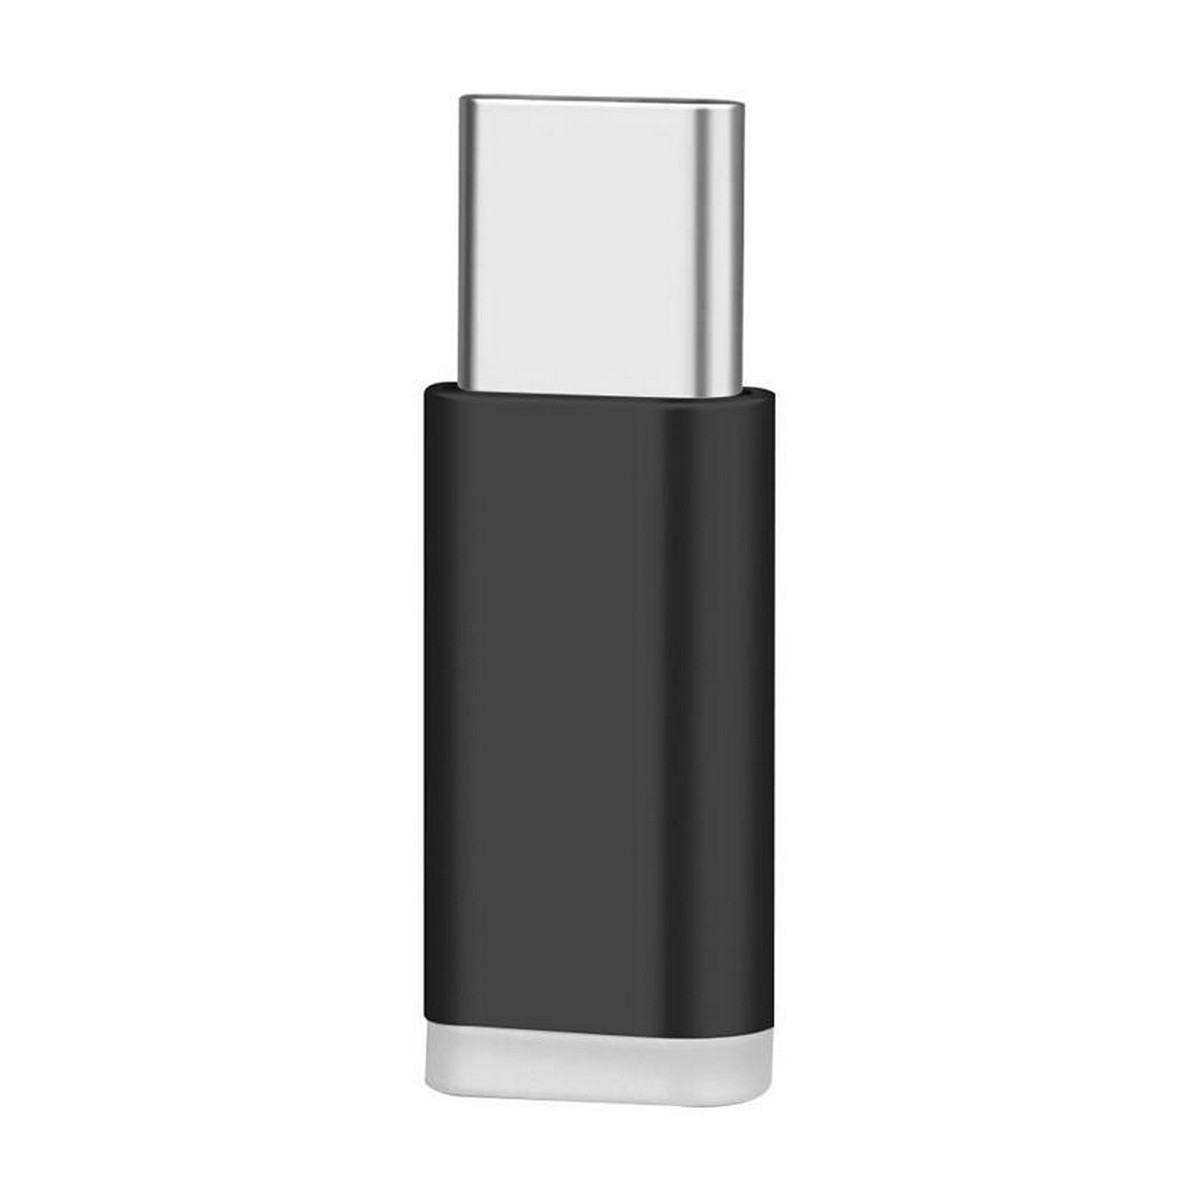 Адаптер XoKo AC-010 microUSB-USB Type-C Black (XK-AC010-BK)